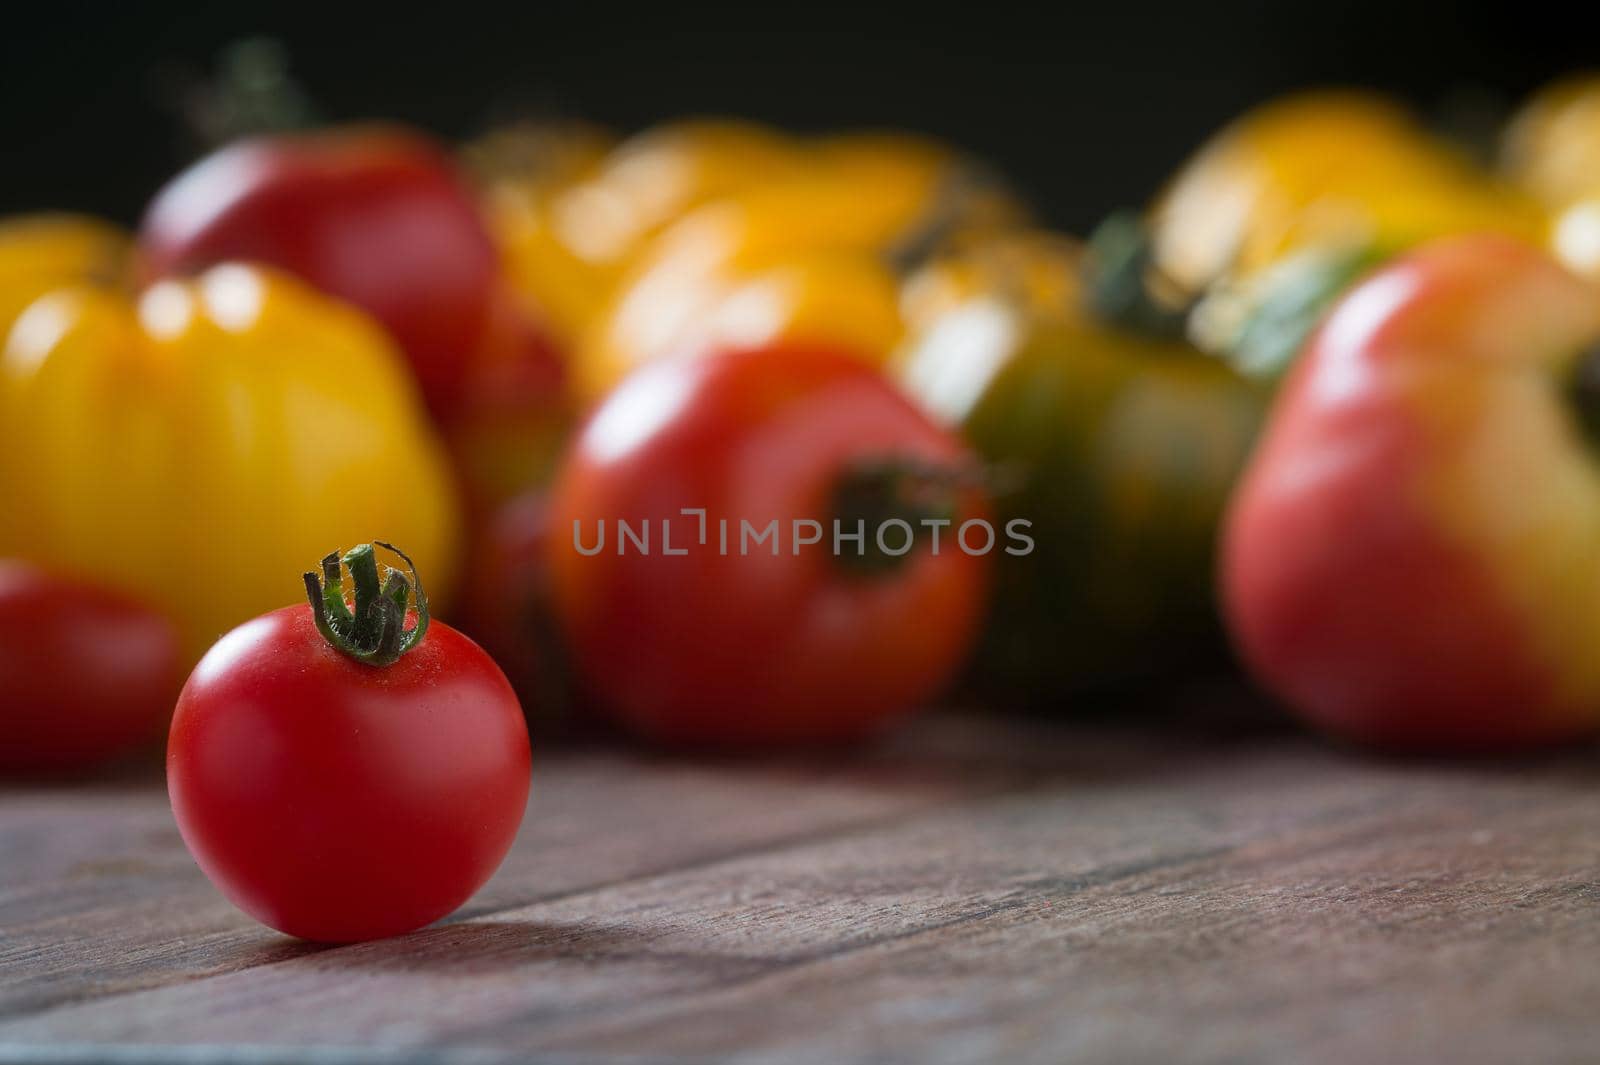 Colourful tomatoes by kaliantye